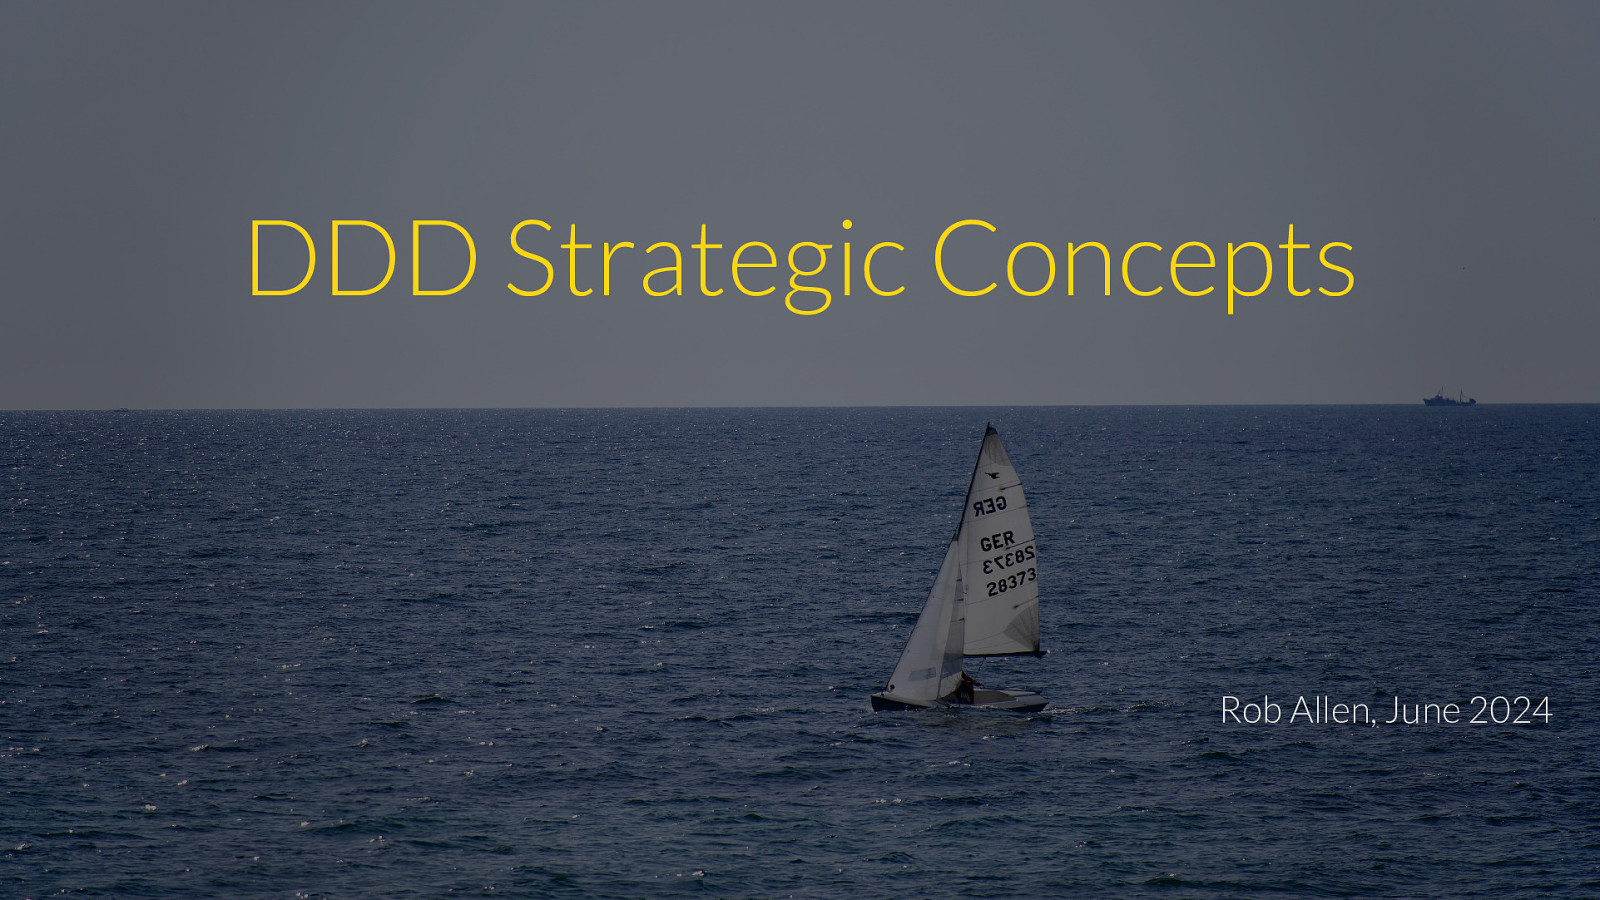 DDD Strategic Concepts